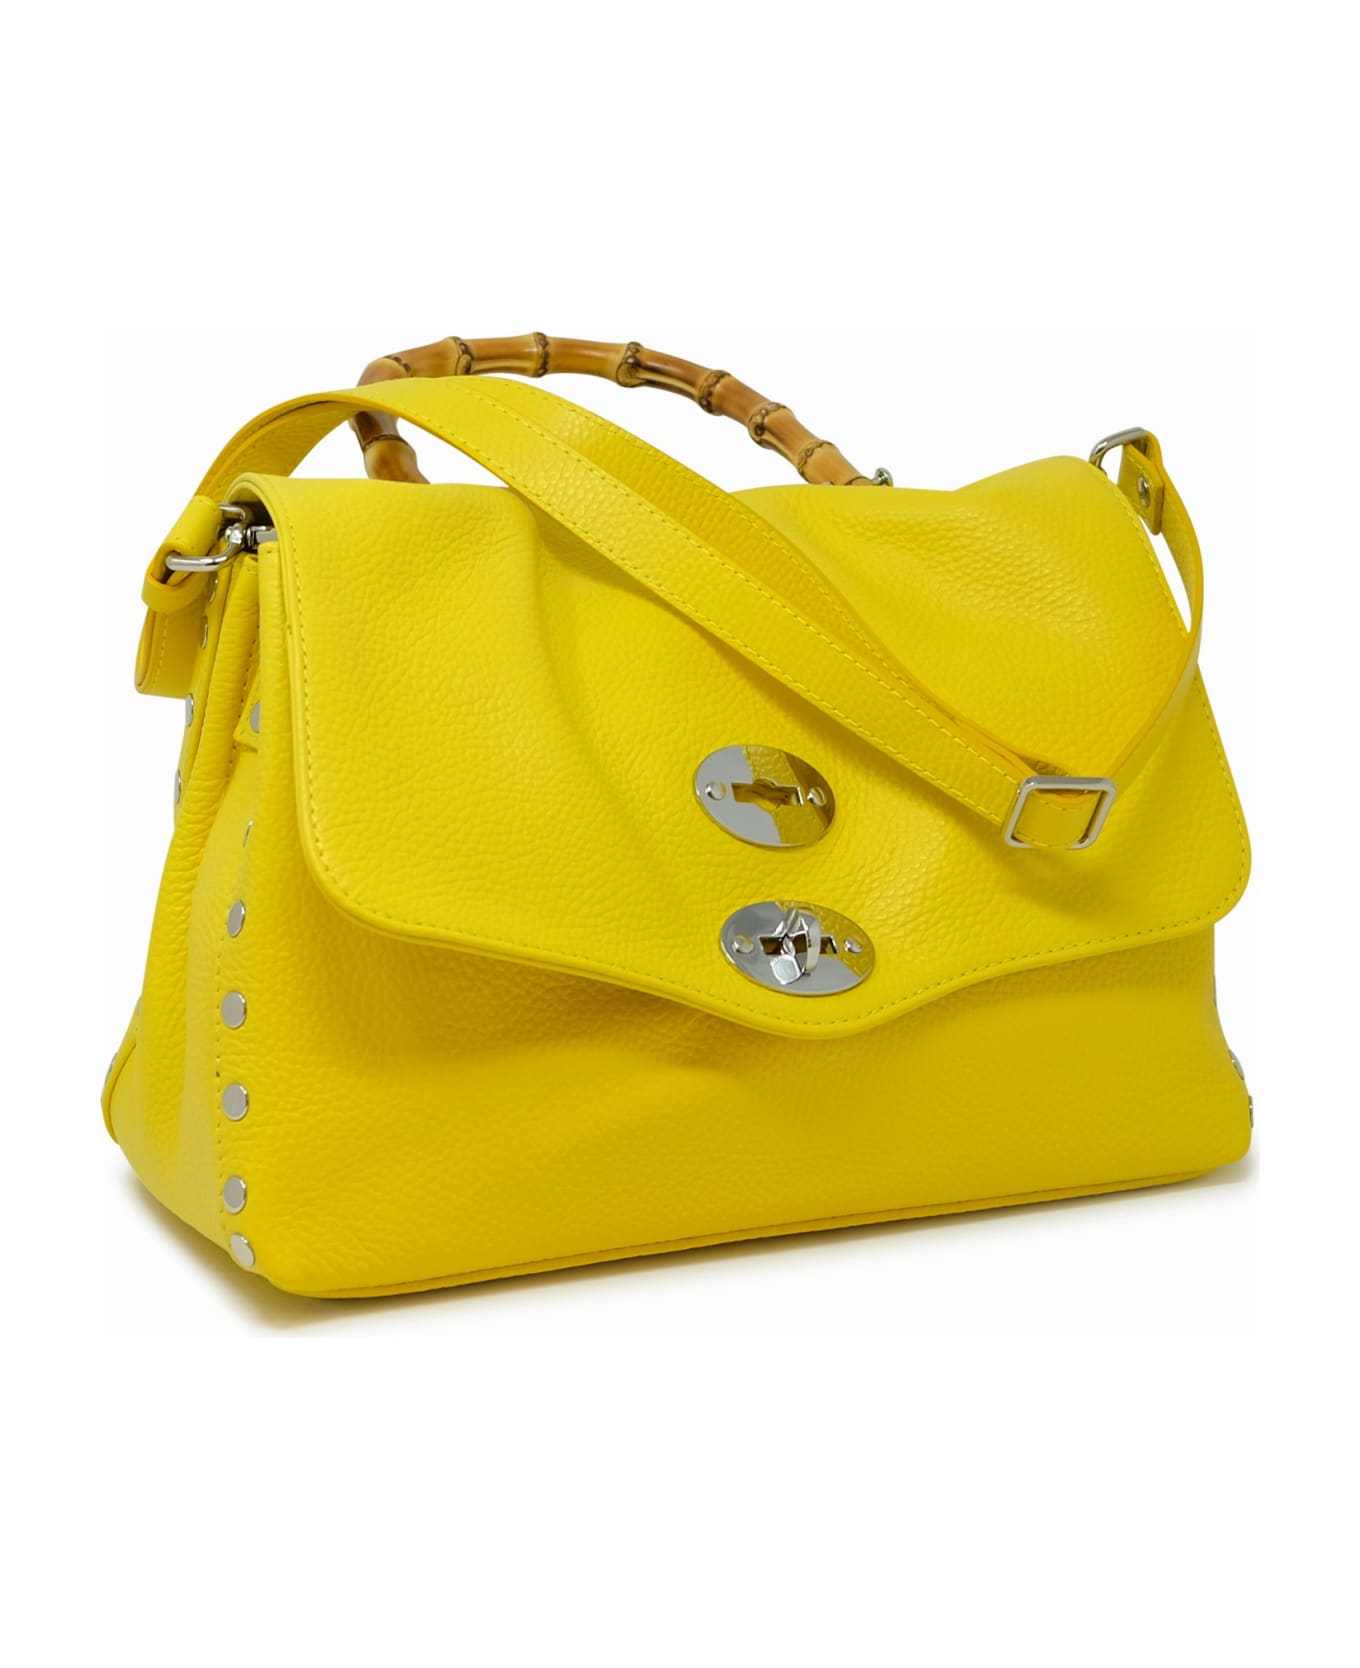 Zanellato 068010-0950000-z1025 Yellow Postina Daily S Bamboo Leather Handbag - YELLOW トートバッグ